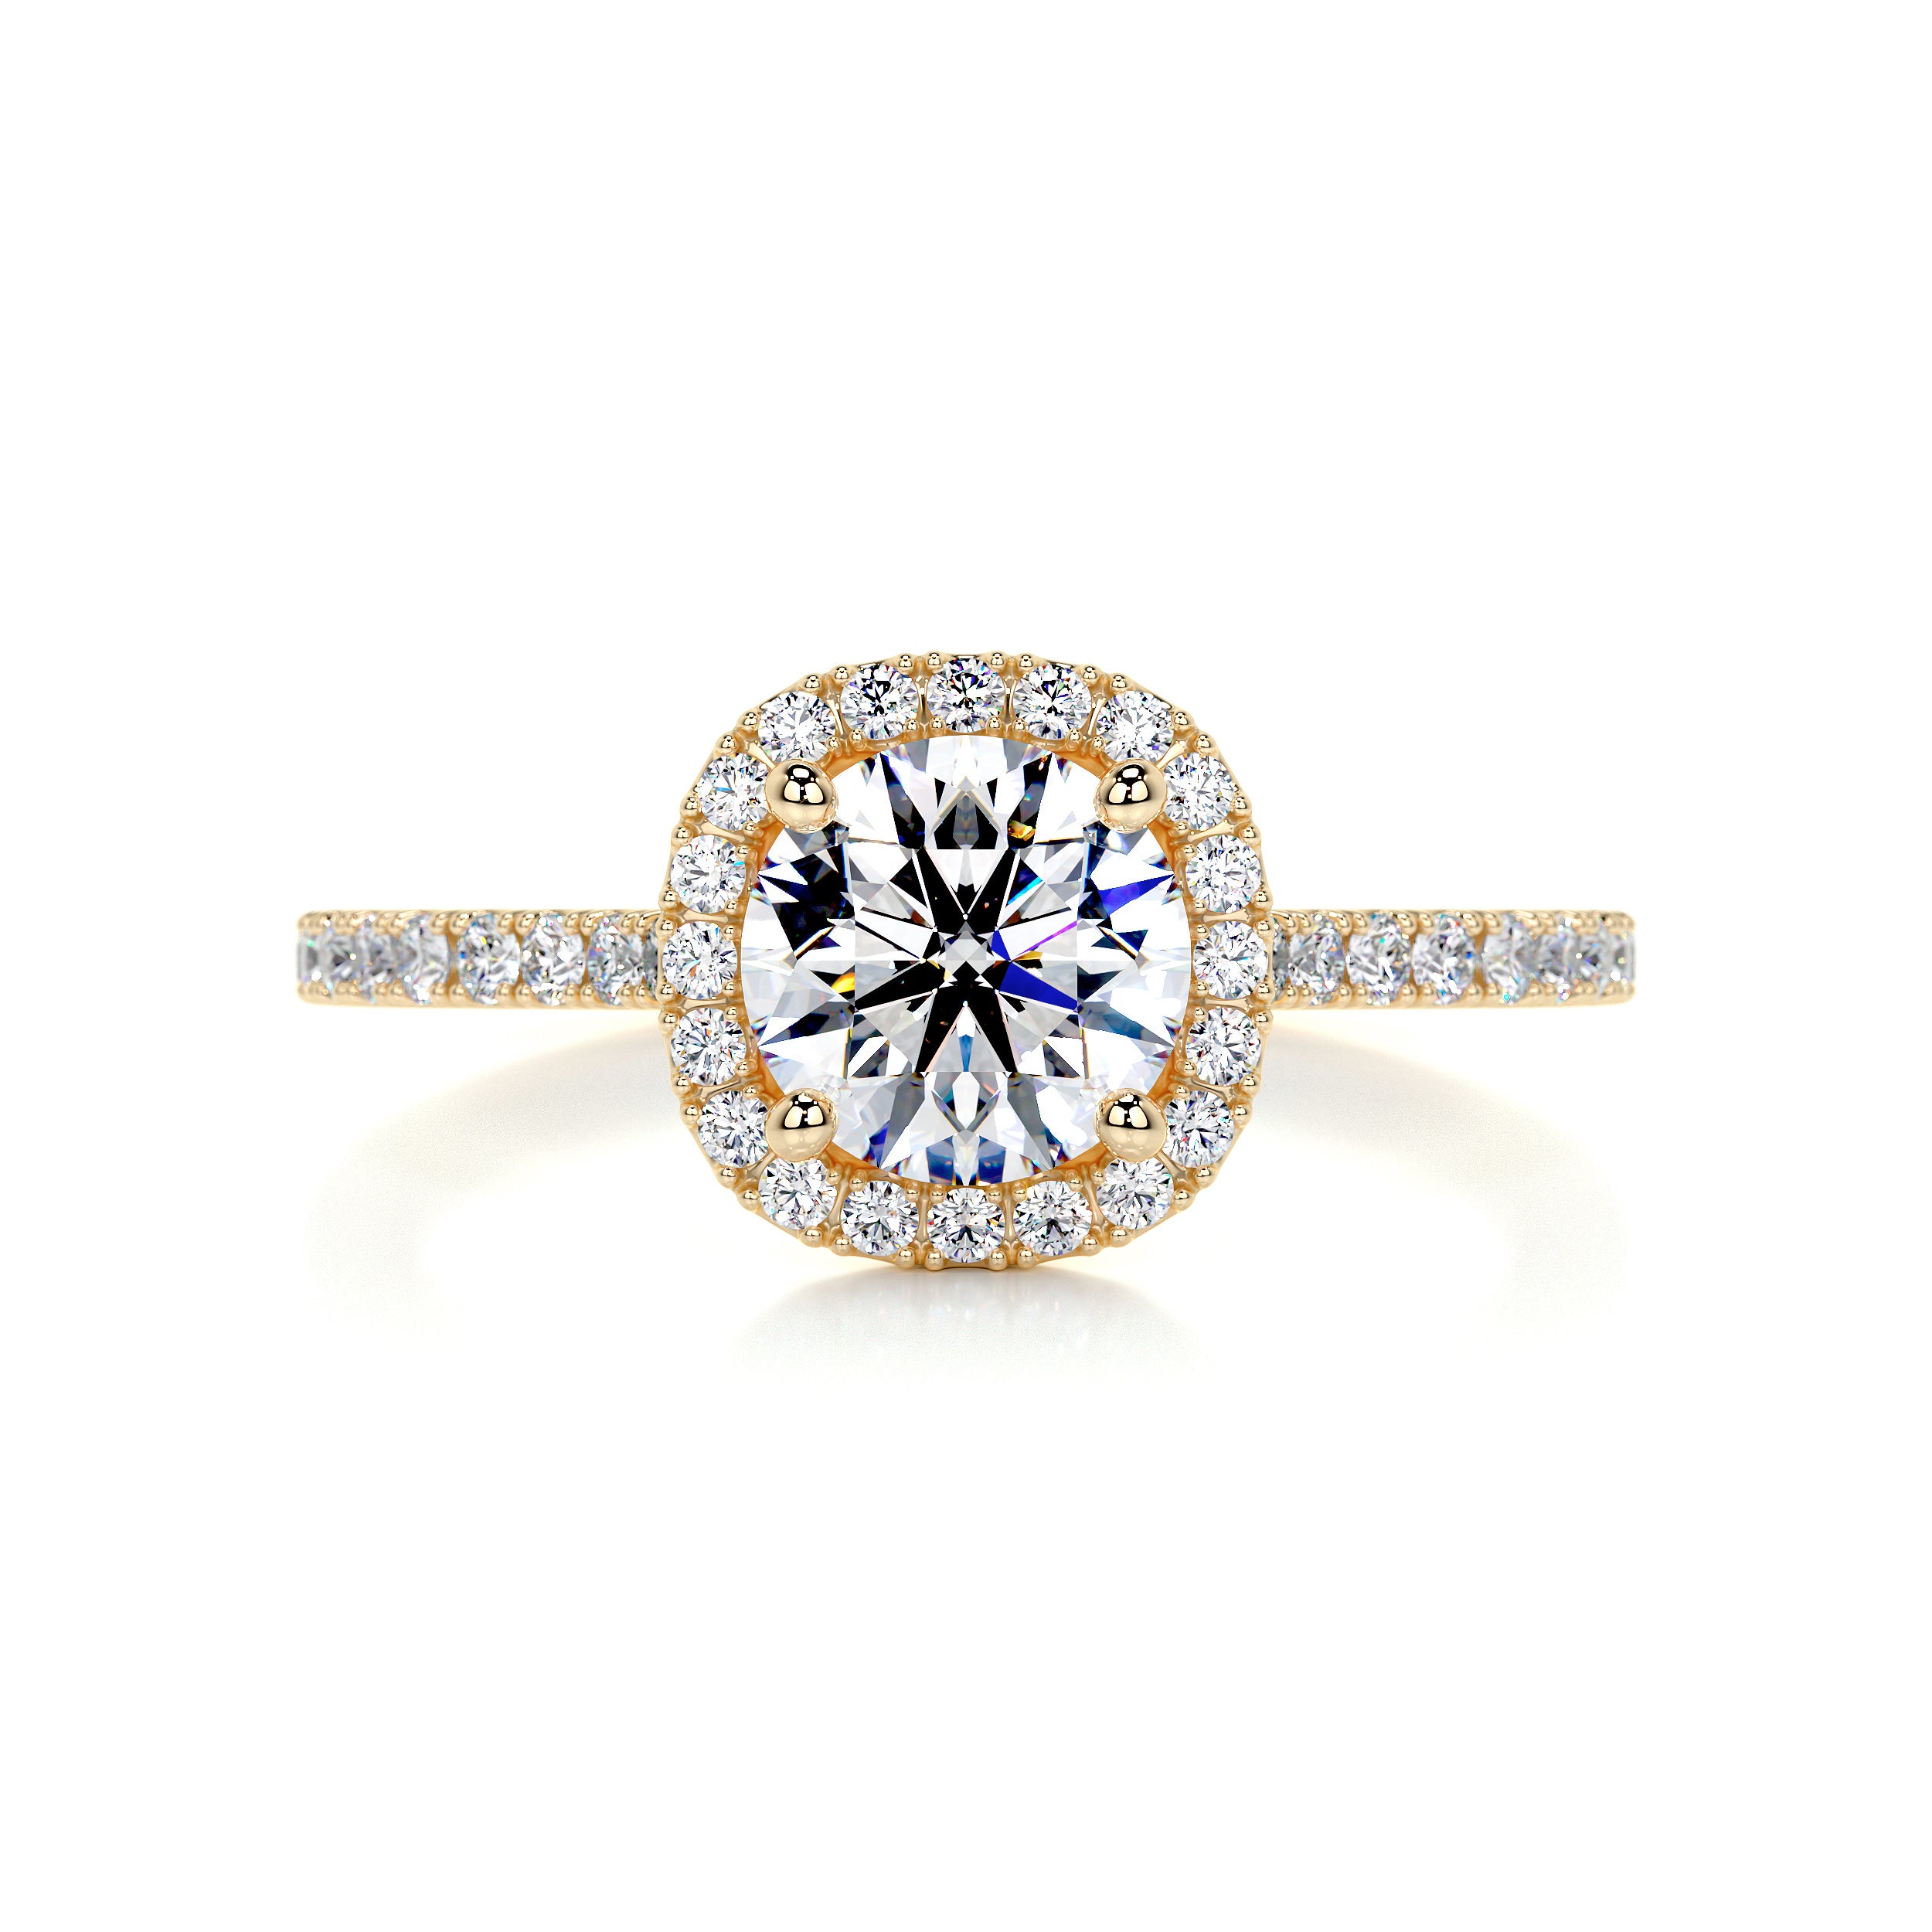 Claudia Diamond Engagement Ring   (1.35 Carat) -18K Yellow Gold